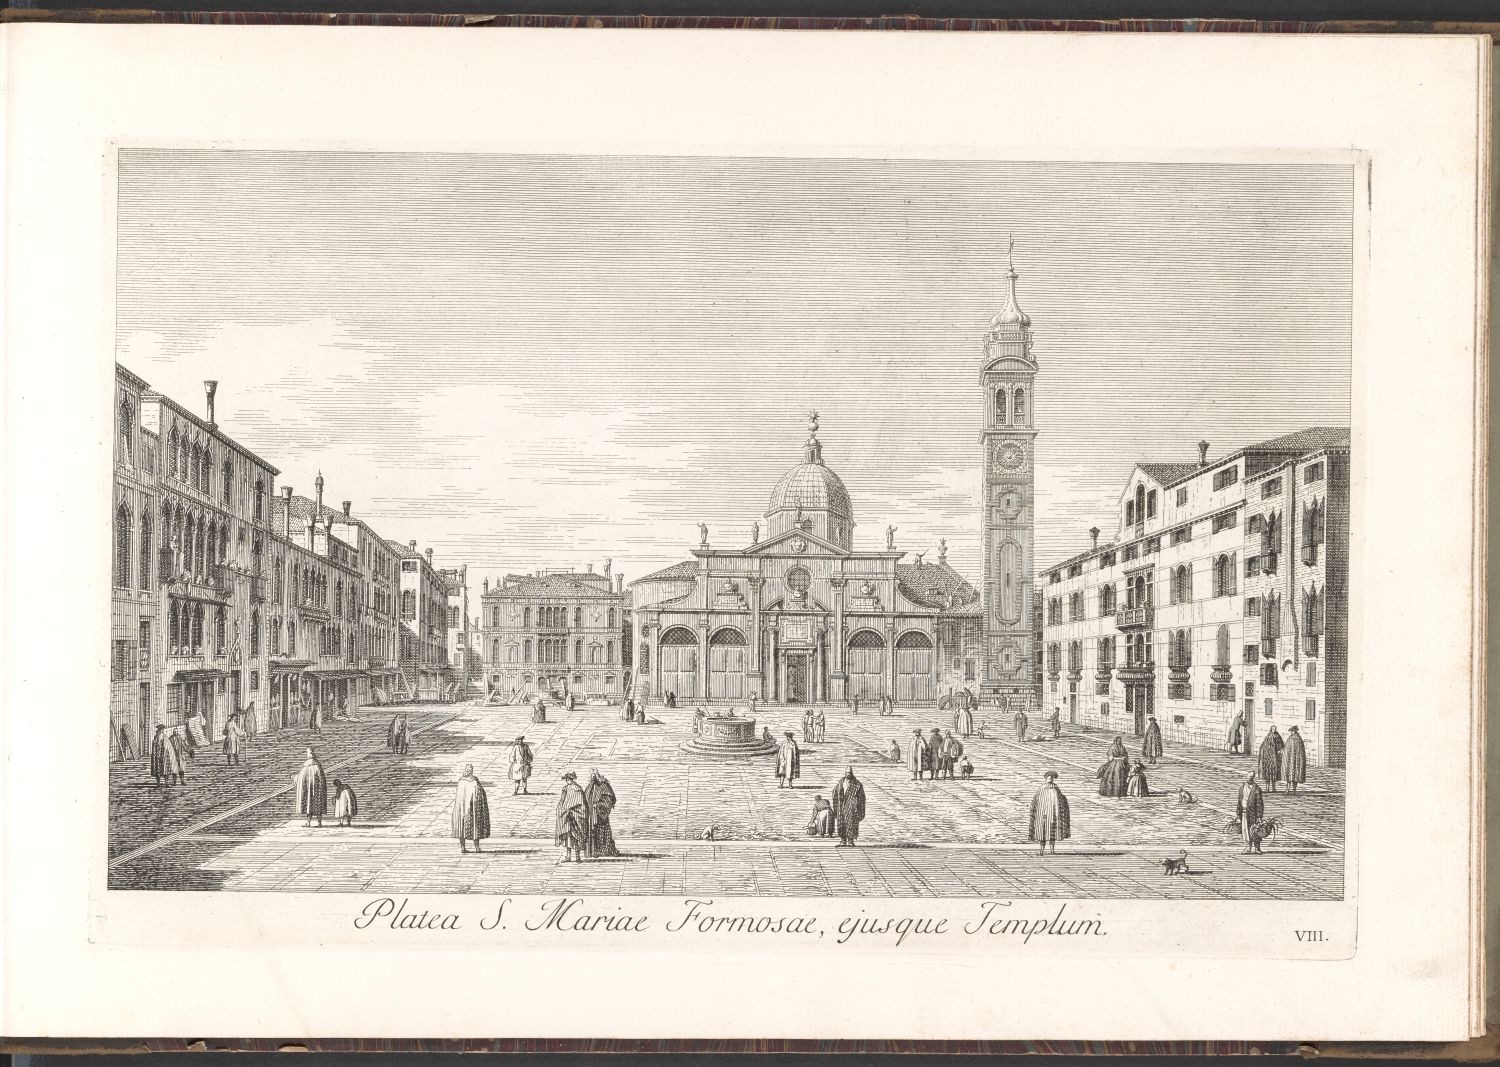 Venedig, VIII. Platea S. Mariae Formosae, ejusque Templum. (Stiftung Händelhaus, Halle CC BY-NC-SA)